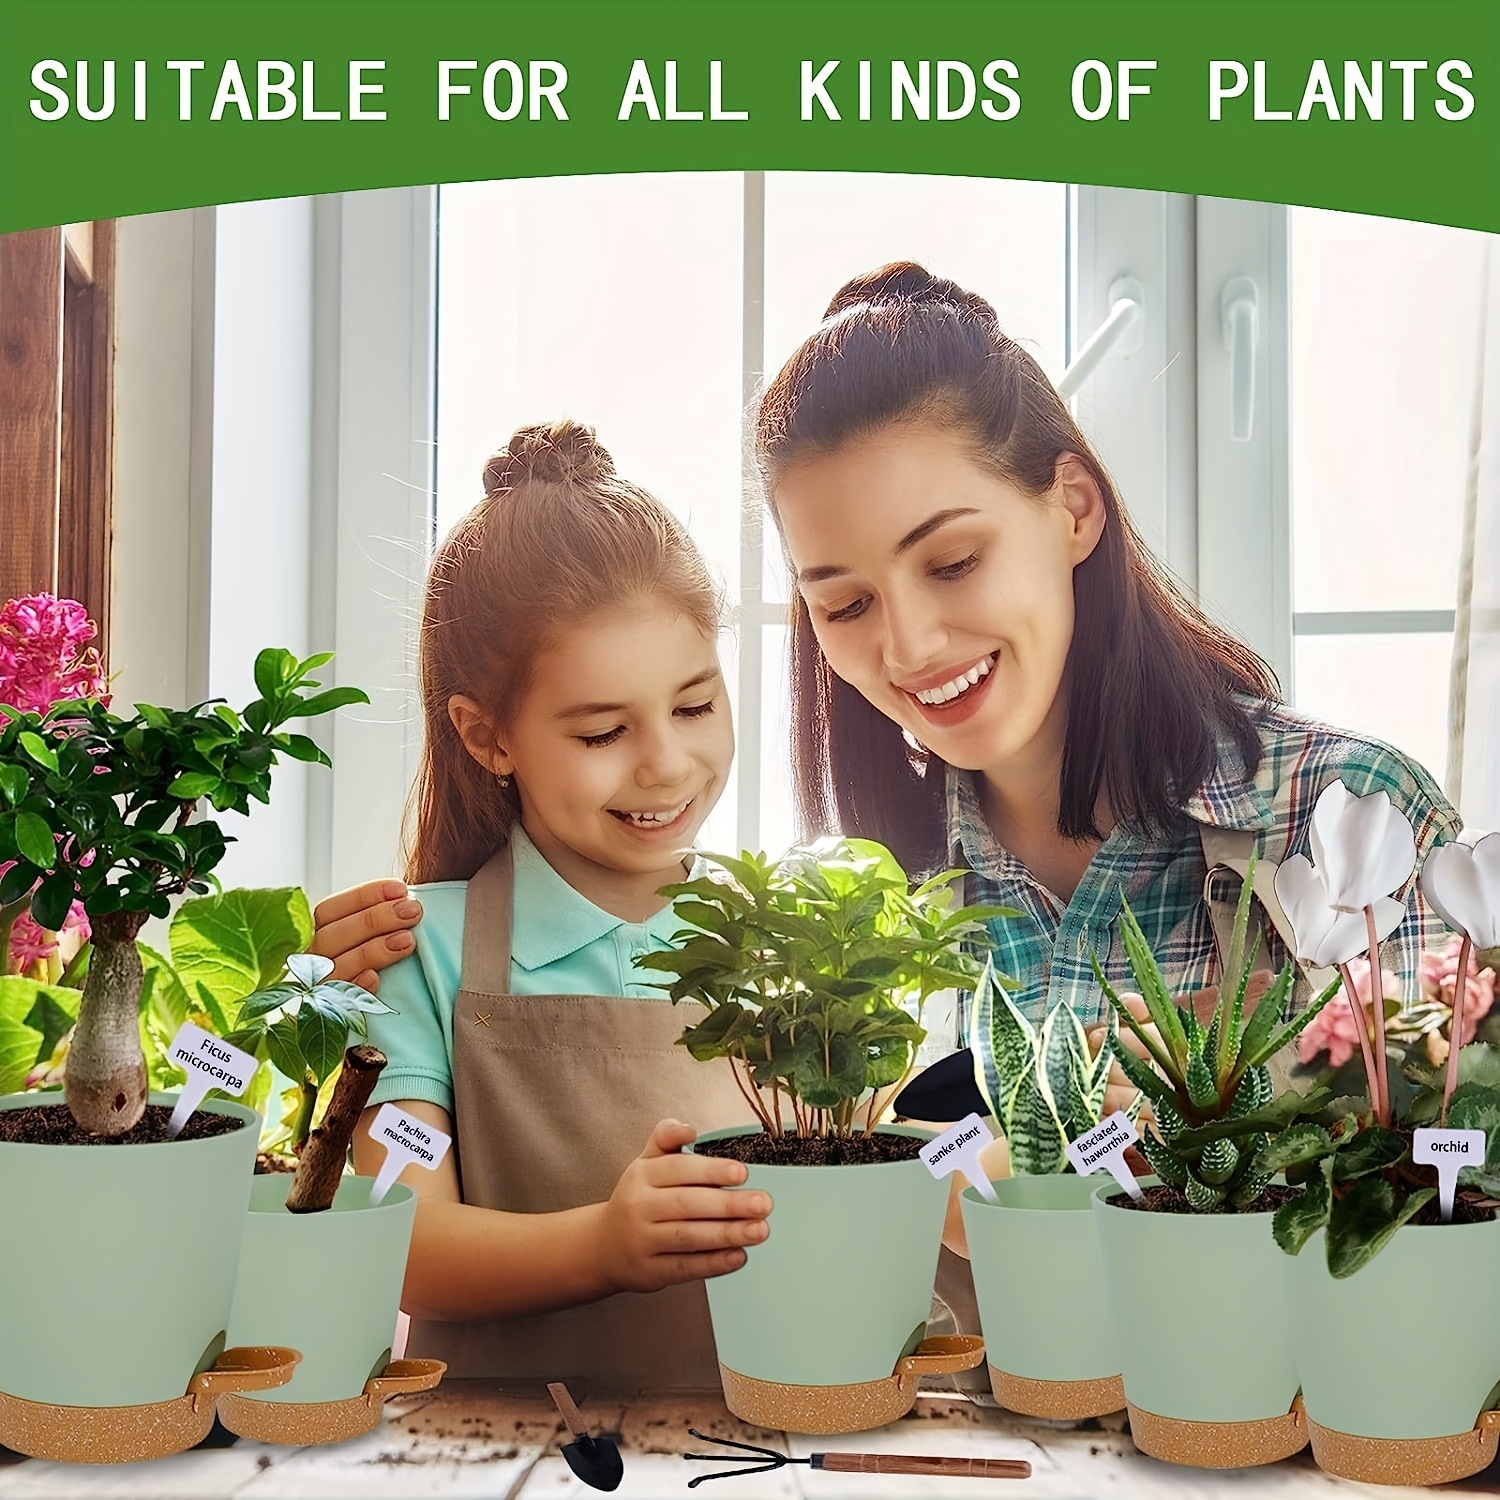 Travelwant Plant Pots, Self Watering Plastic Planter, Modern Decorative Flower Pot for Indoor Outdoor House Plants, Succulents, Flowers, Size: 13.5